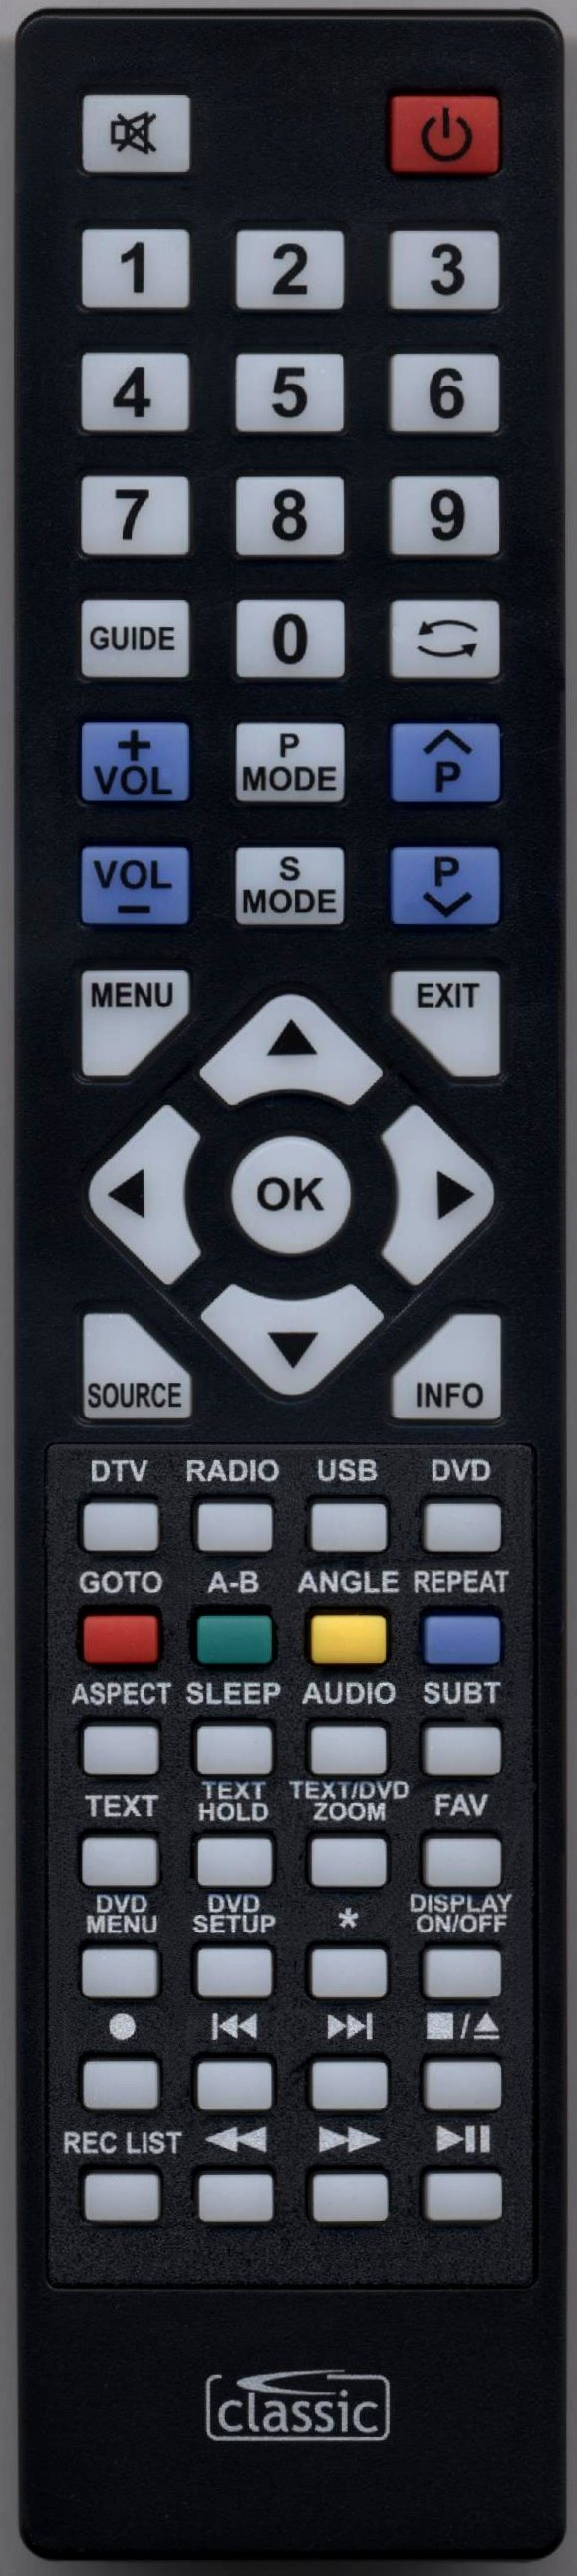 JMB JT0240001/01 Remote Control Alternative